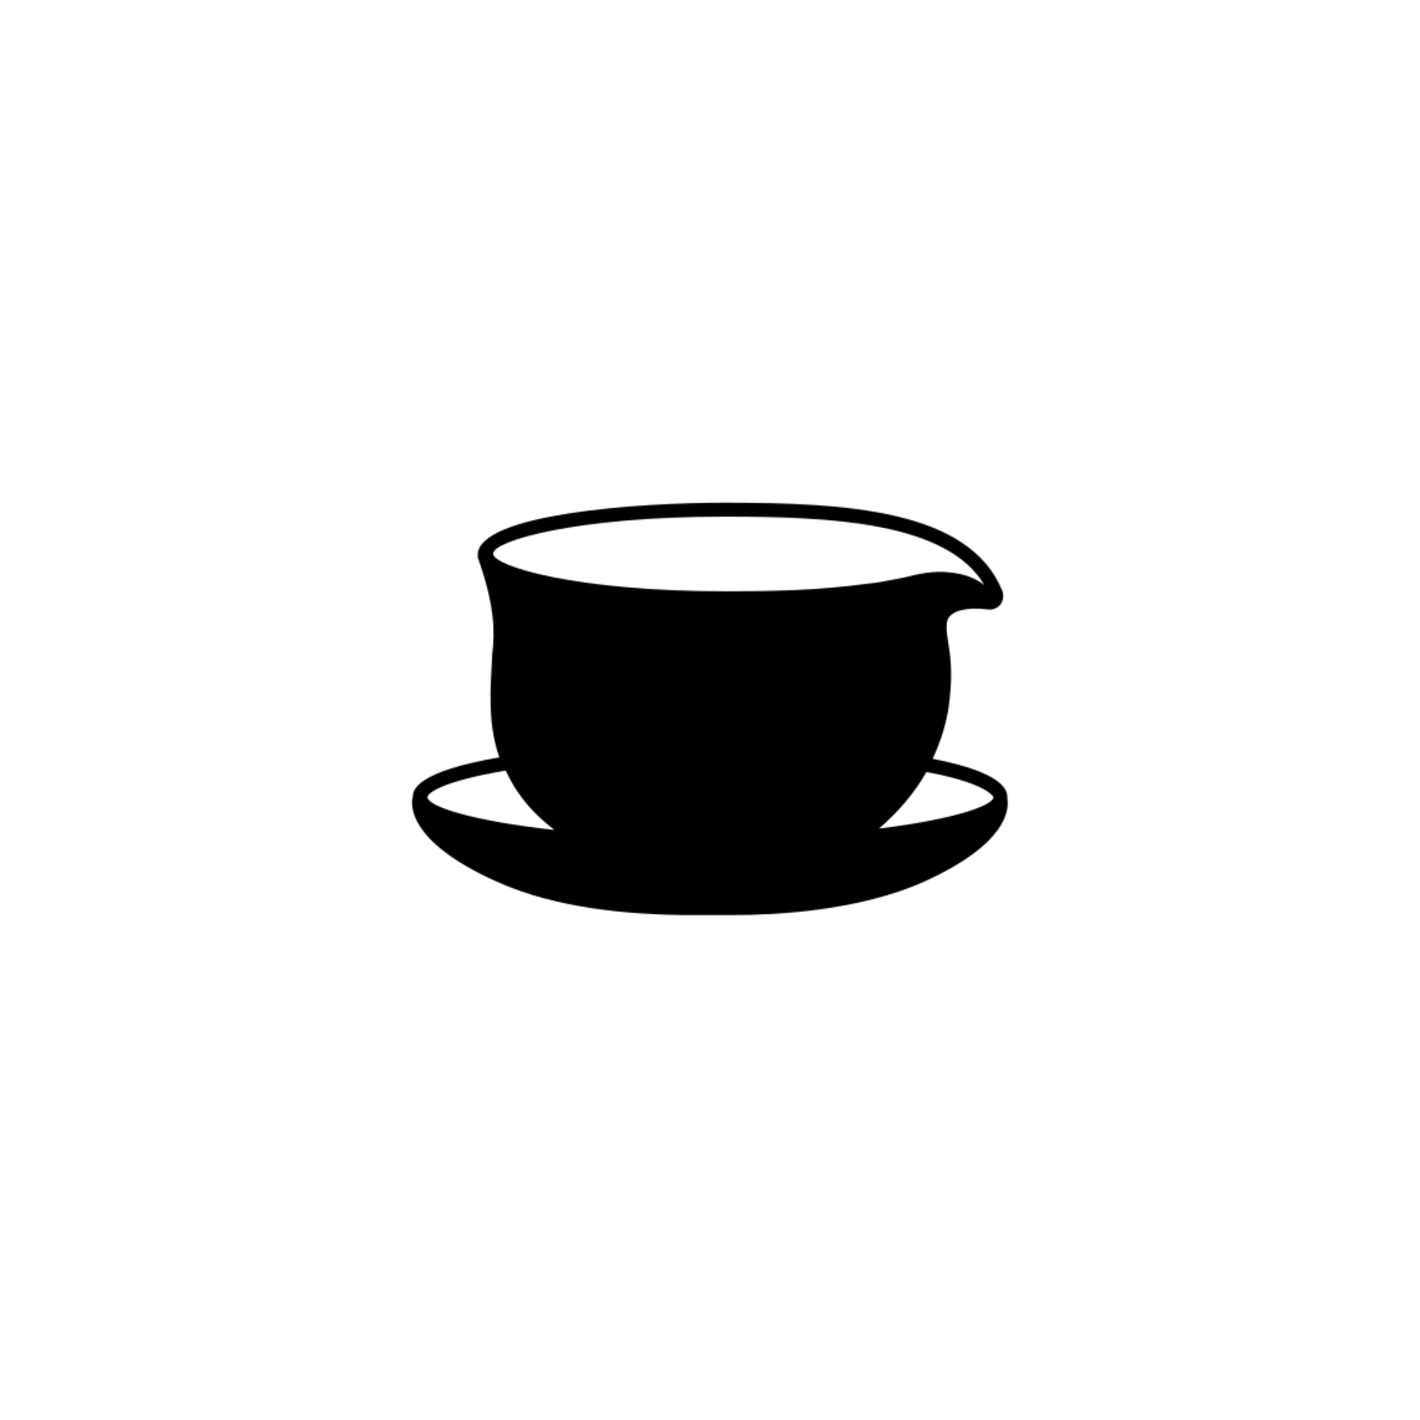 black icon of a matcha bowl on a plat